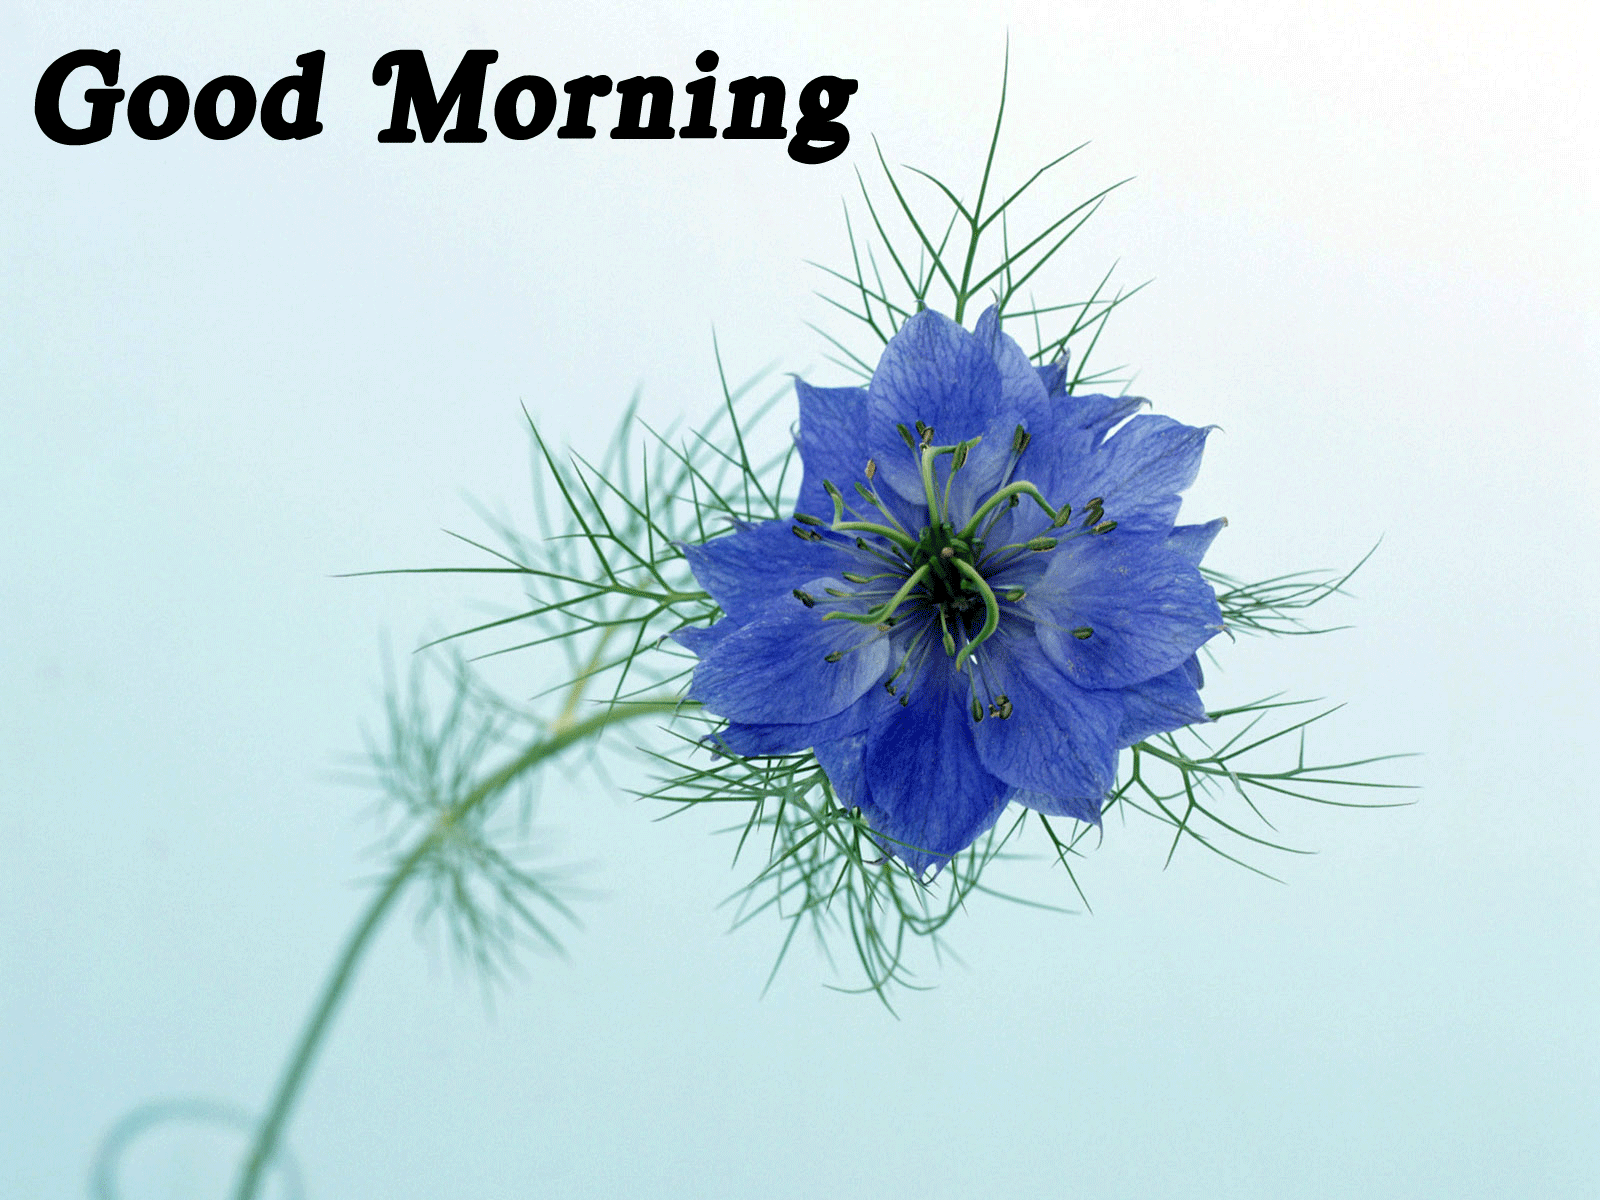 Good Morning Wallpapers - Flower Hd Good Morning - 1600x1200 Wallpaper -  